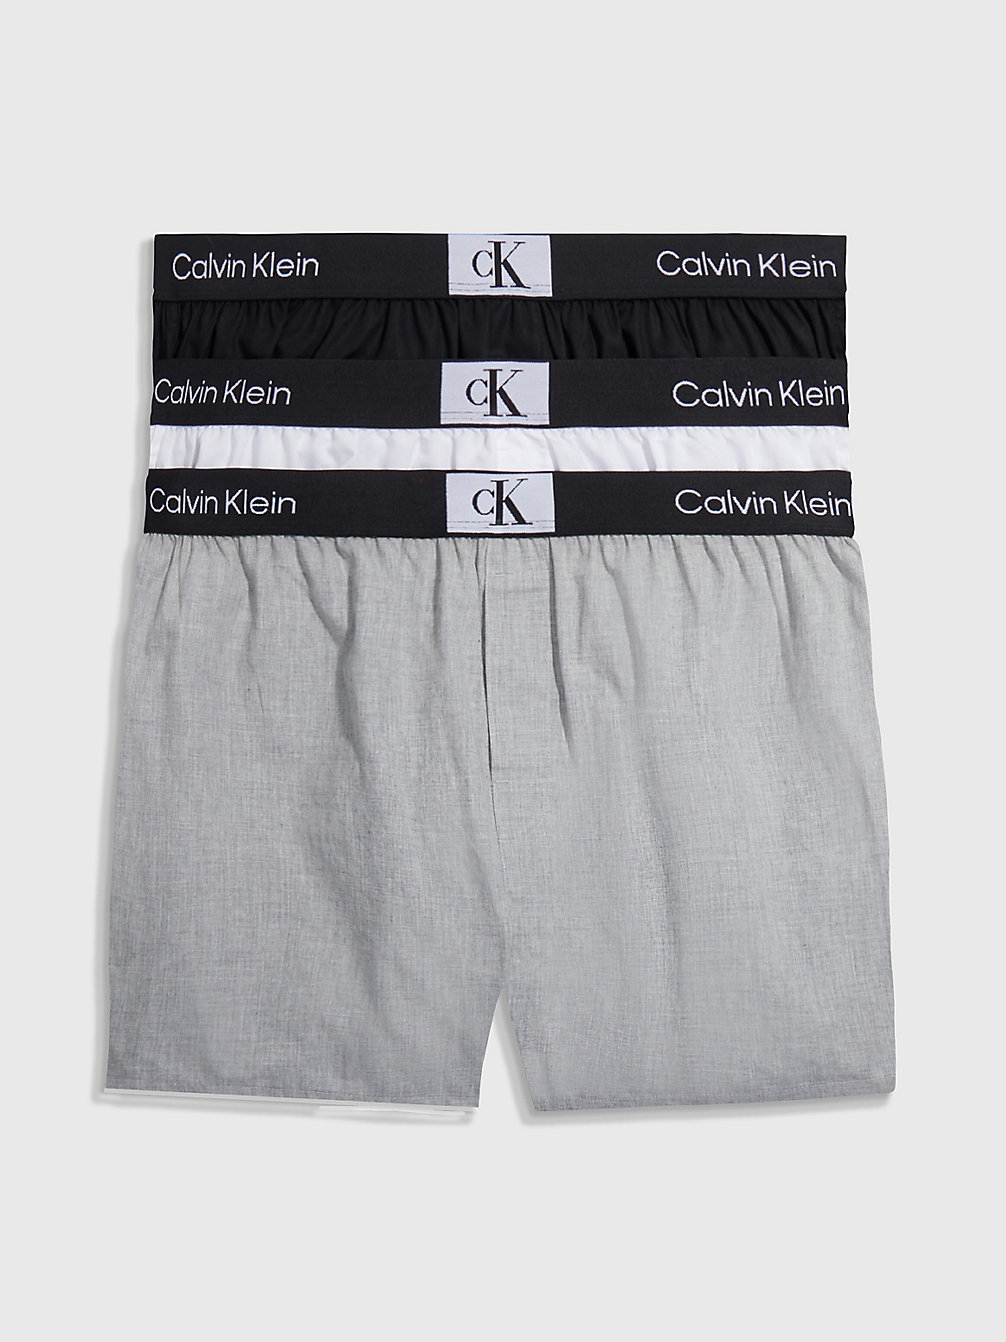 BLACK/WHITE/GREY HEATHER 3 Pack Slim Fit Boxers - Ck96 undefined men Calvin Klein